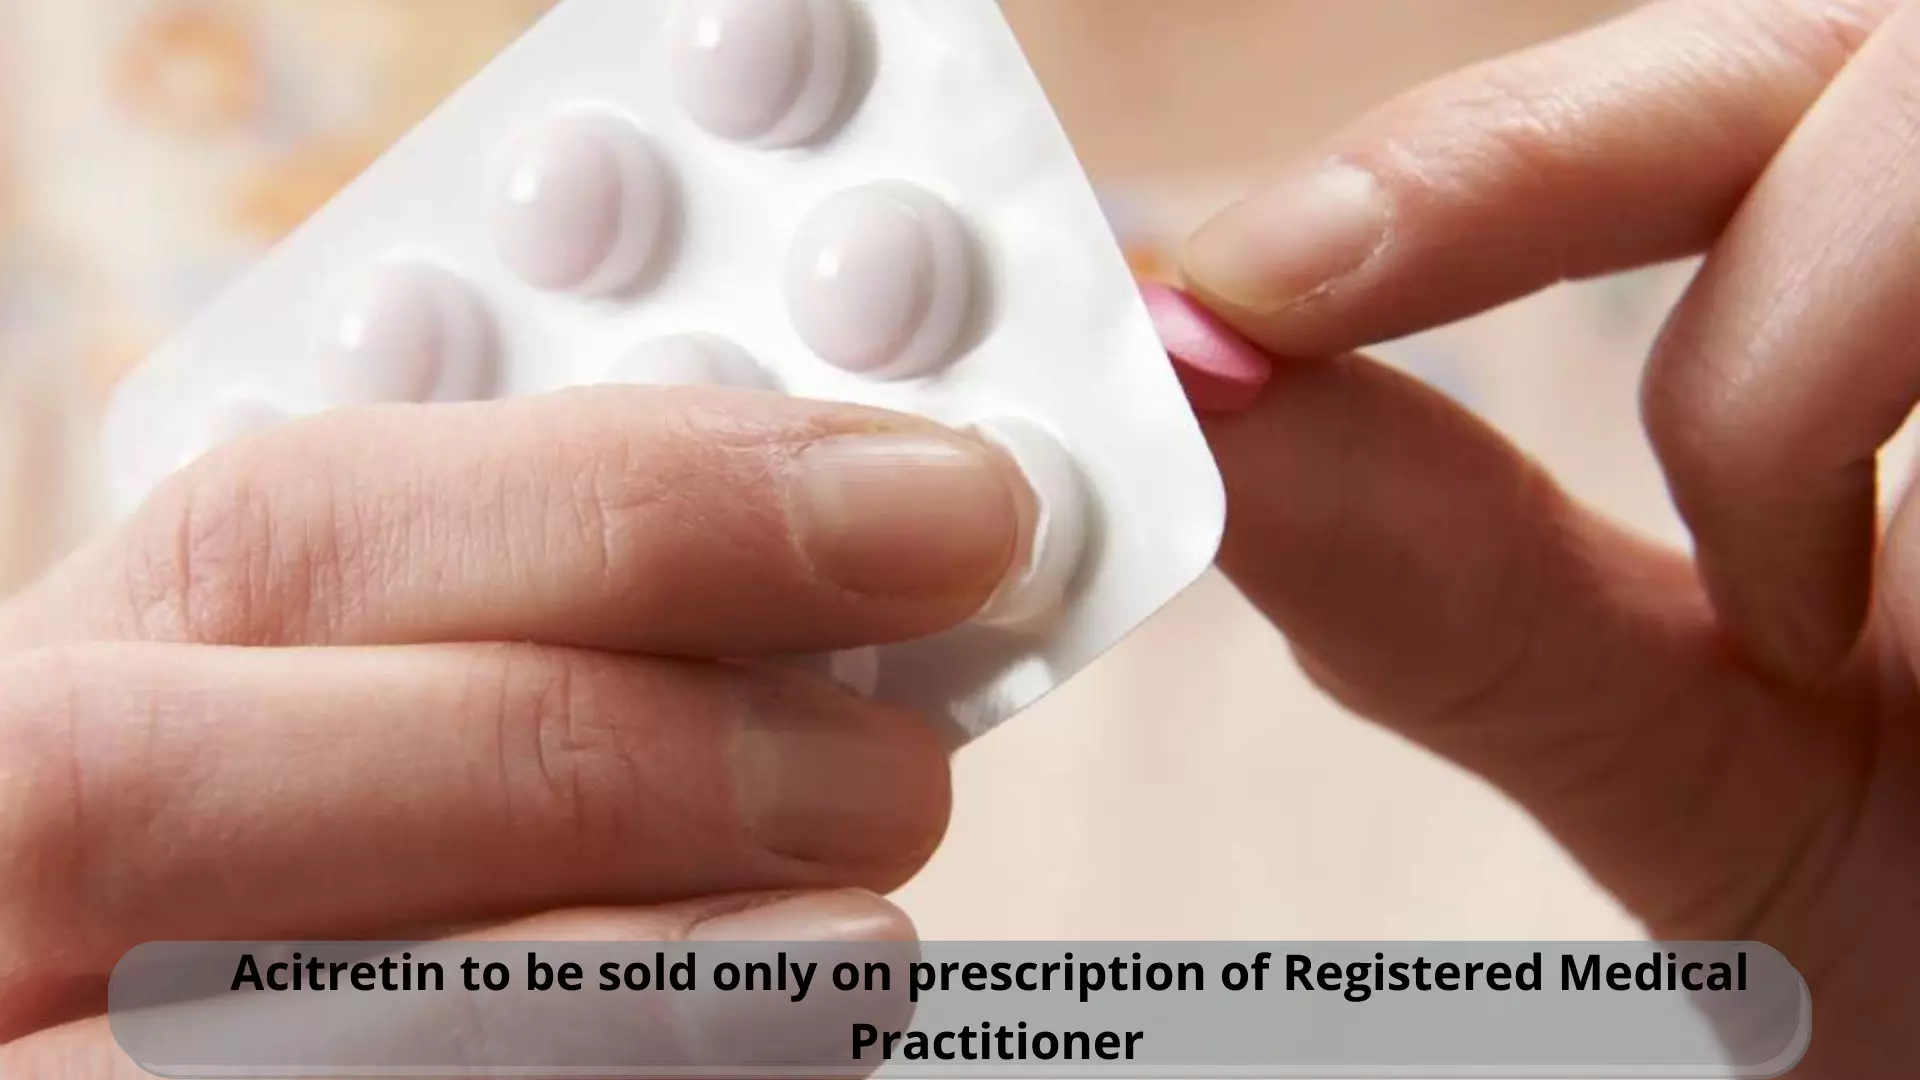 Acitretin to be sold only on prescription of Registered Medical Practitioner